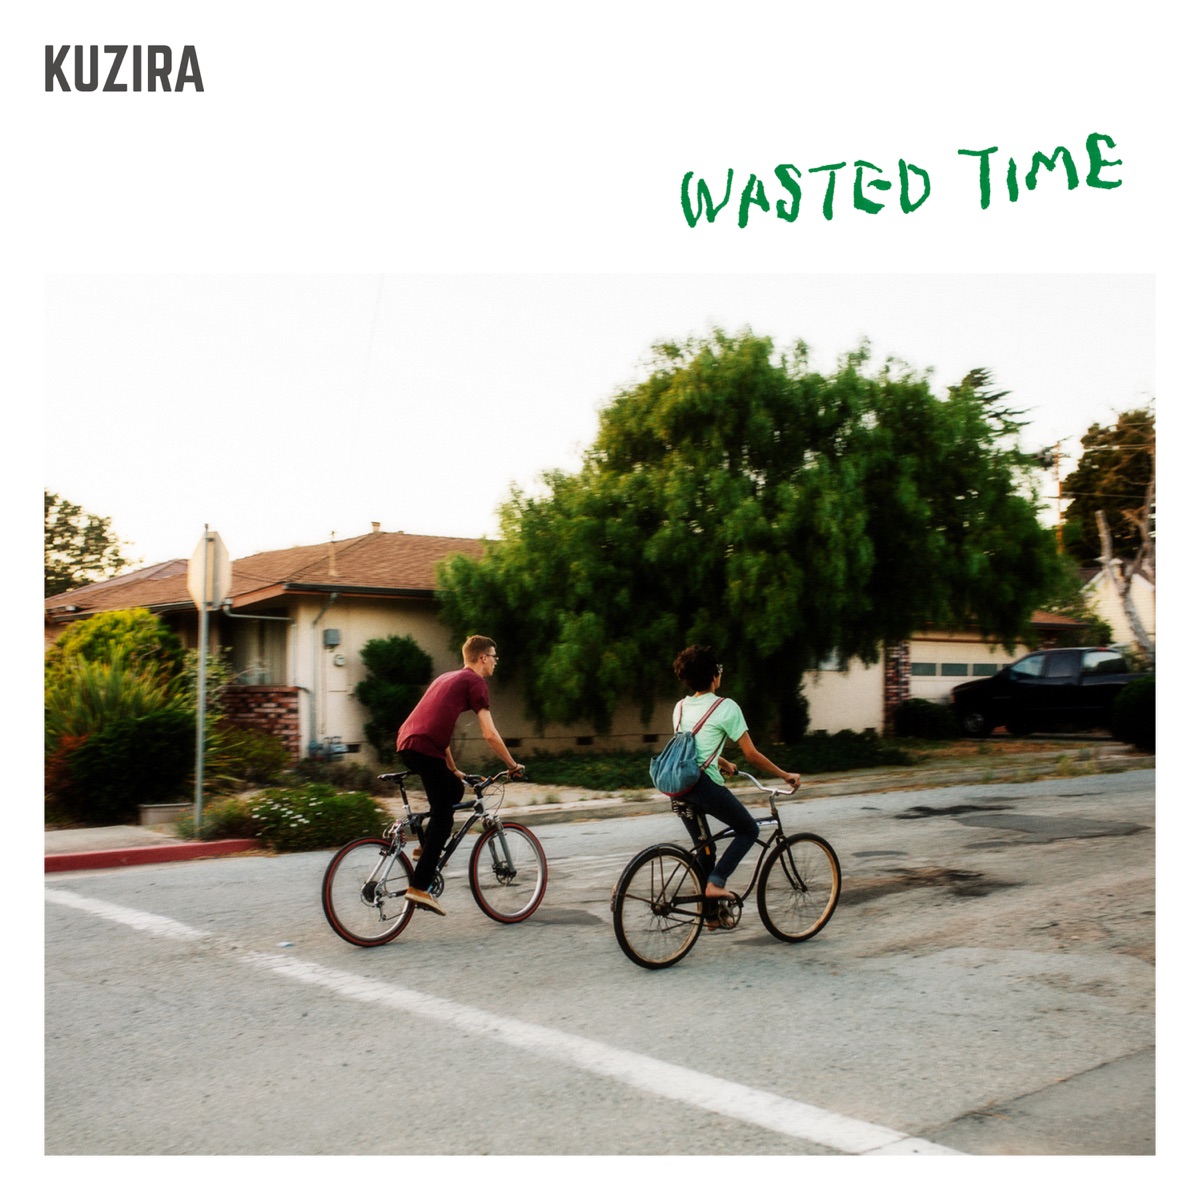 Wasted Time - Single - Album by KUZIRA - Apple Music